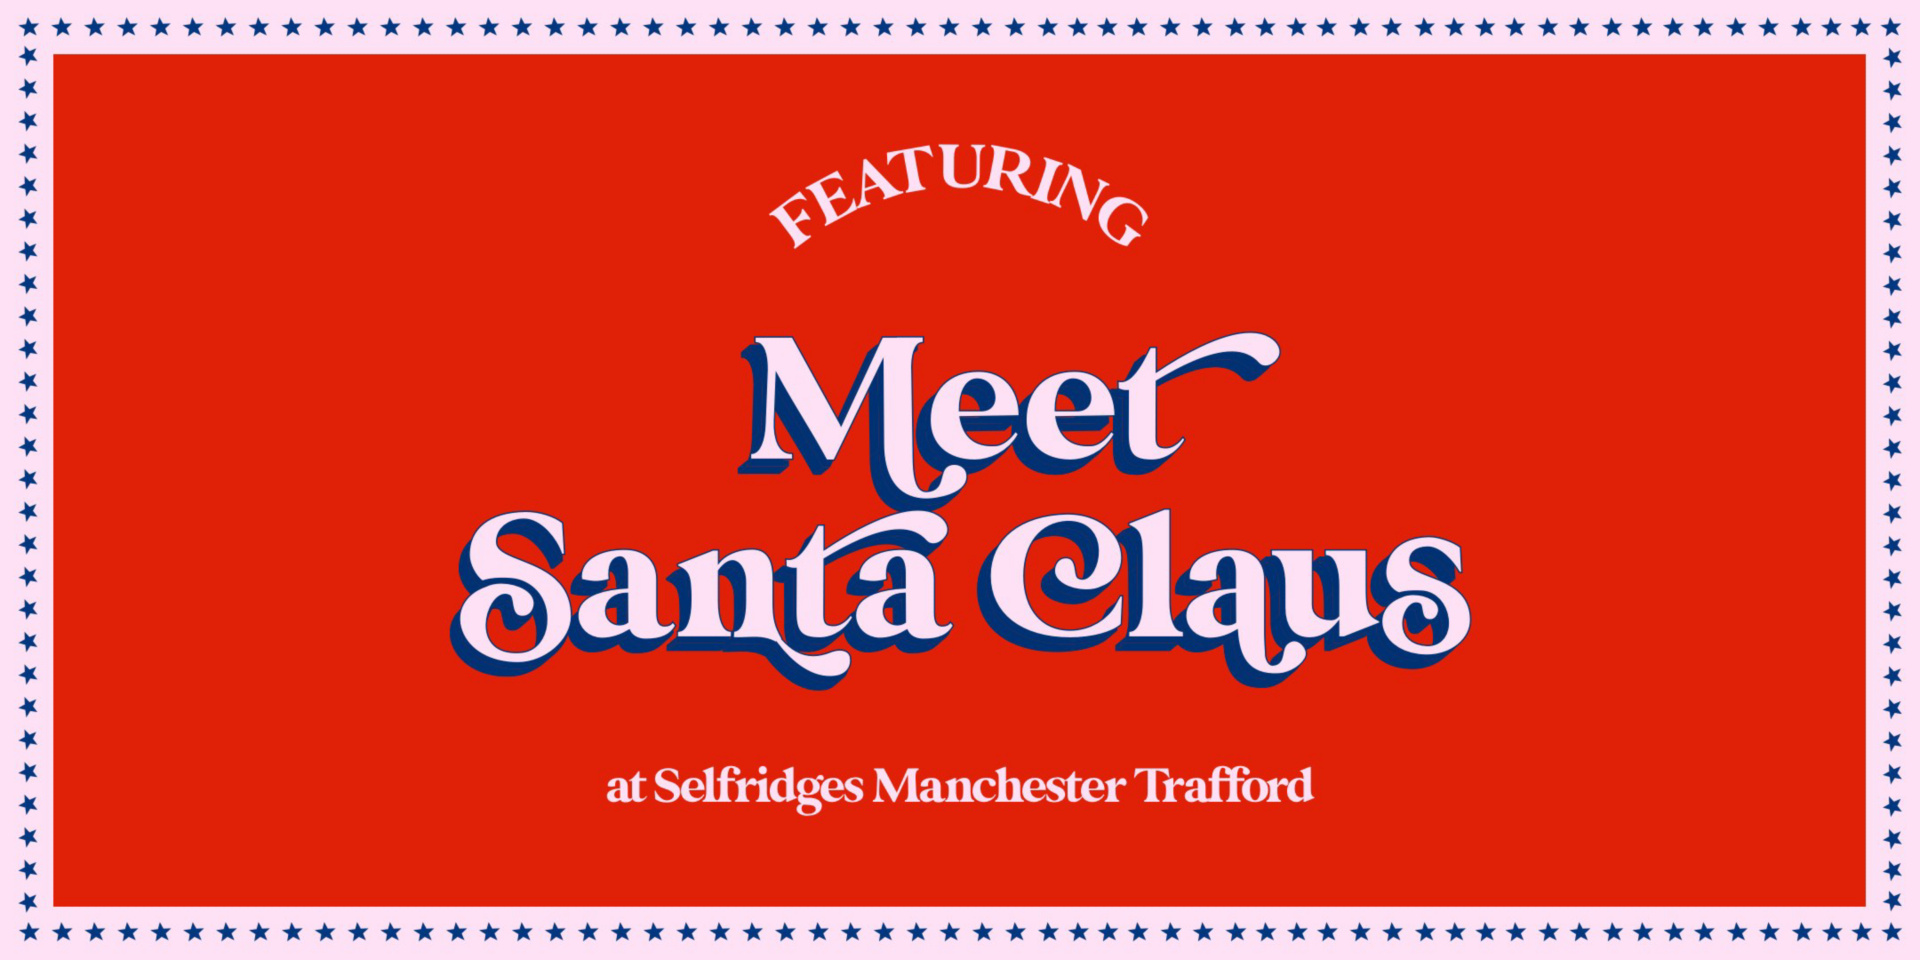 Meet Santa Claus at Selfridges Manchester Trafford 